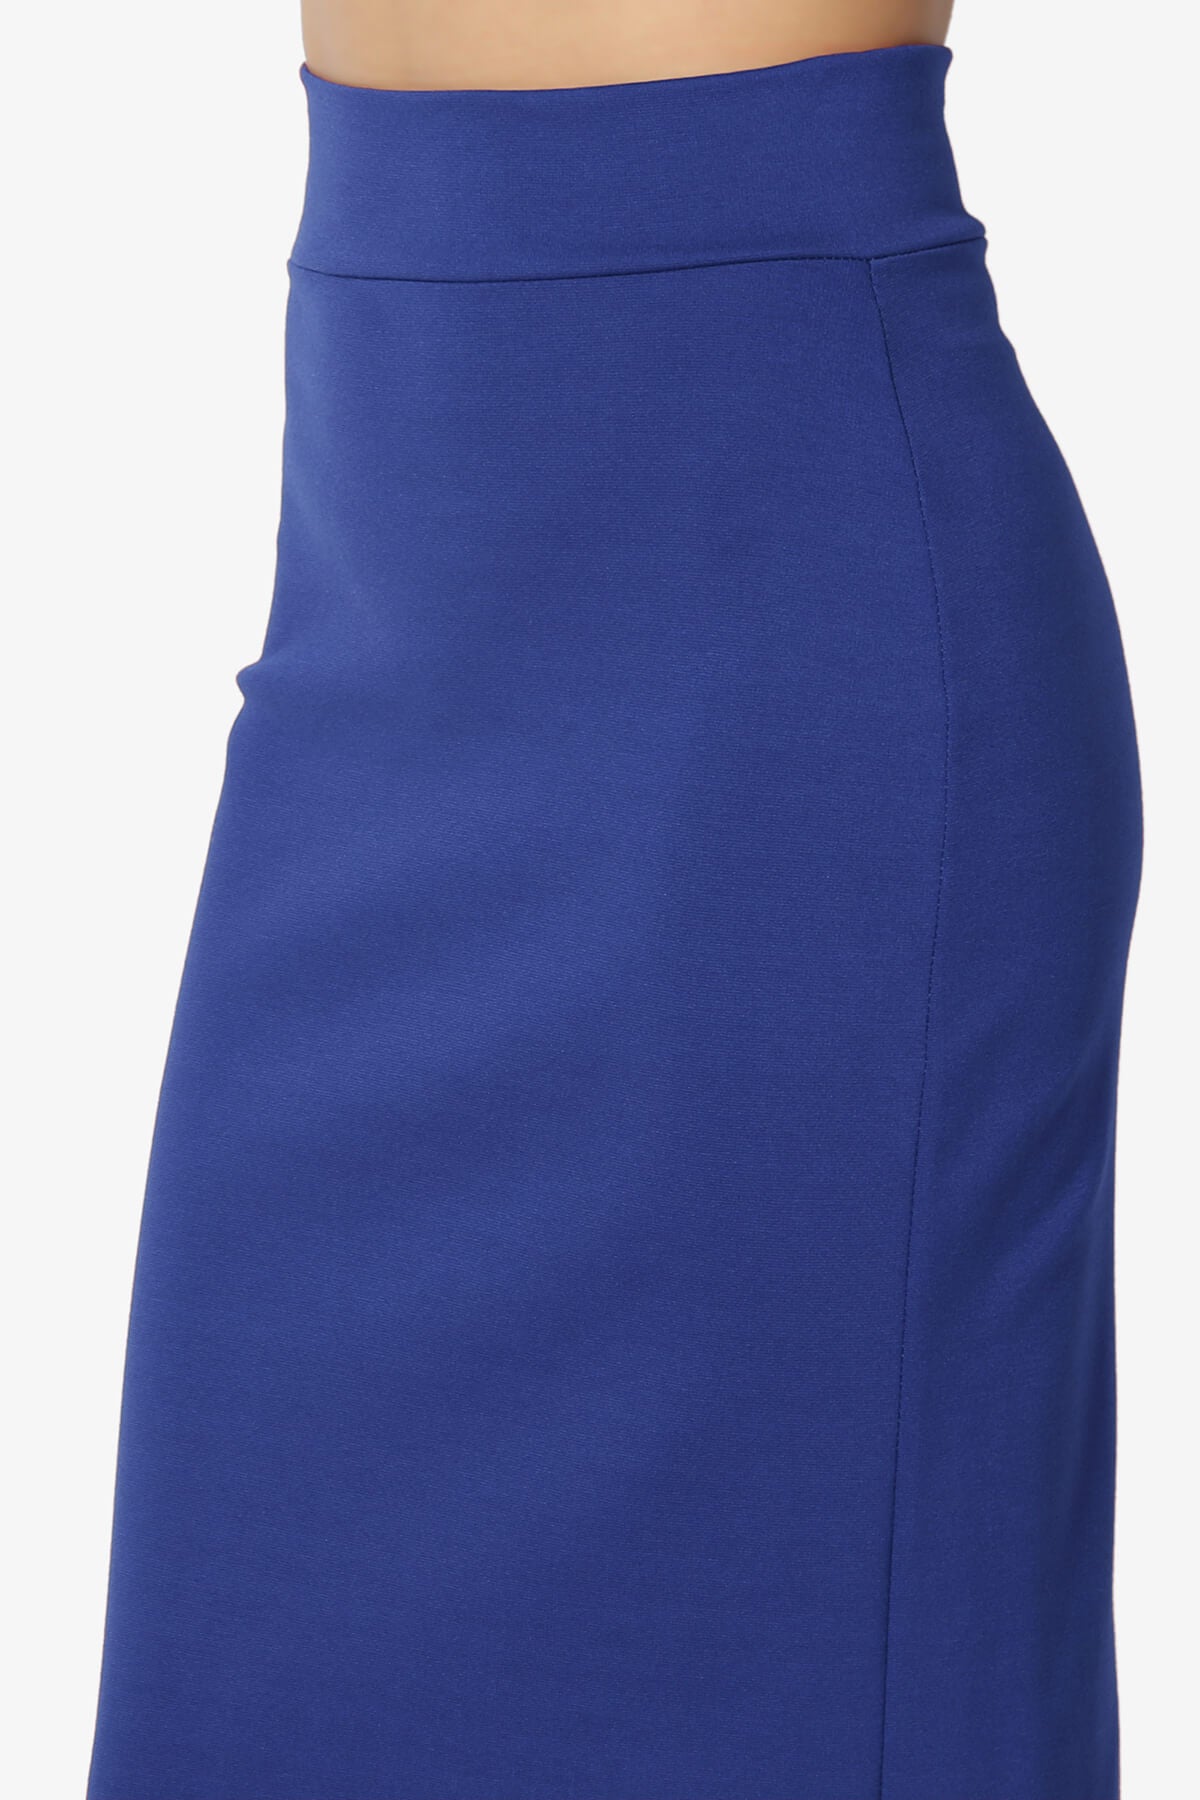 Carleta Mid Calf Pencil Skirt ROYAL BLUE_5